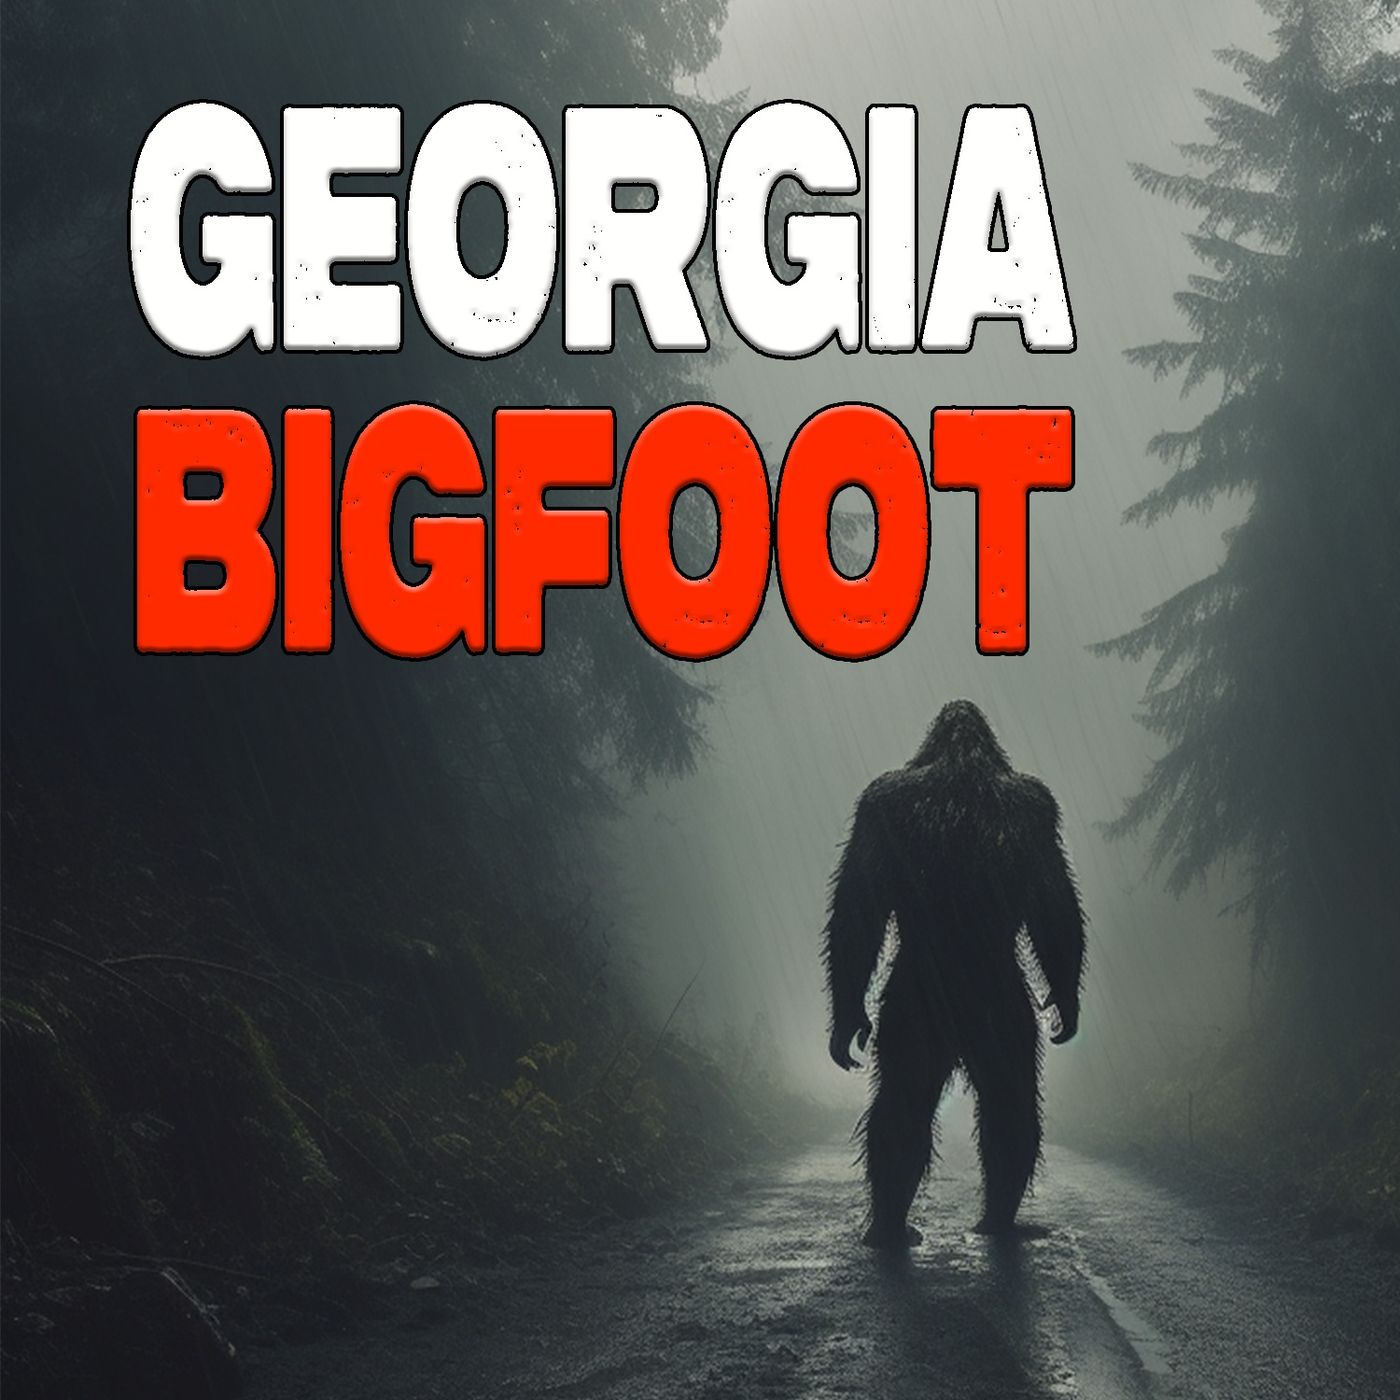 Georgia Hunter Talks about His Bigfoot Encounters